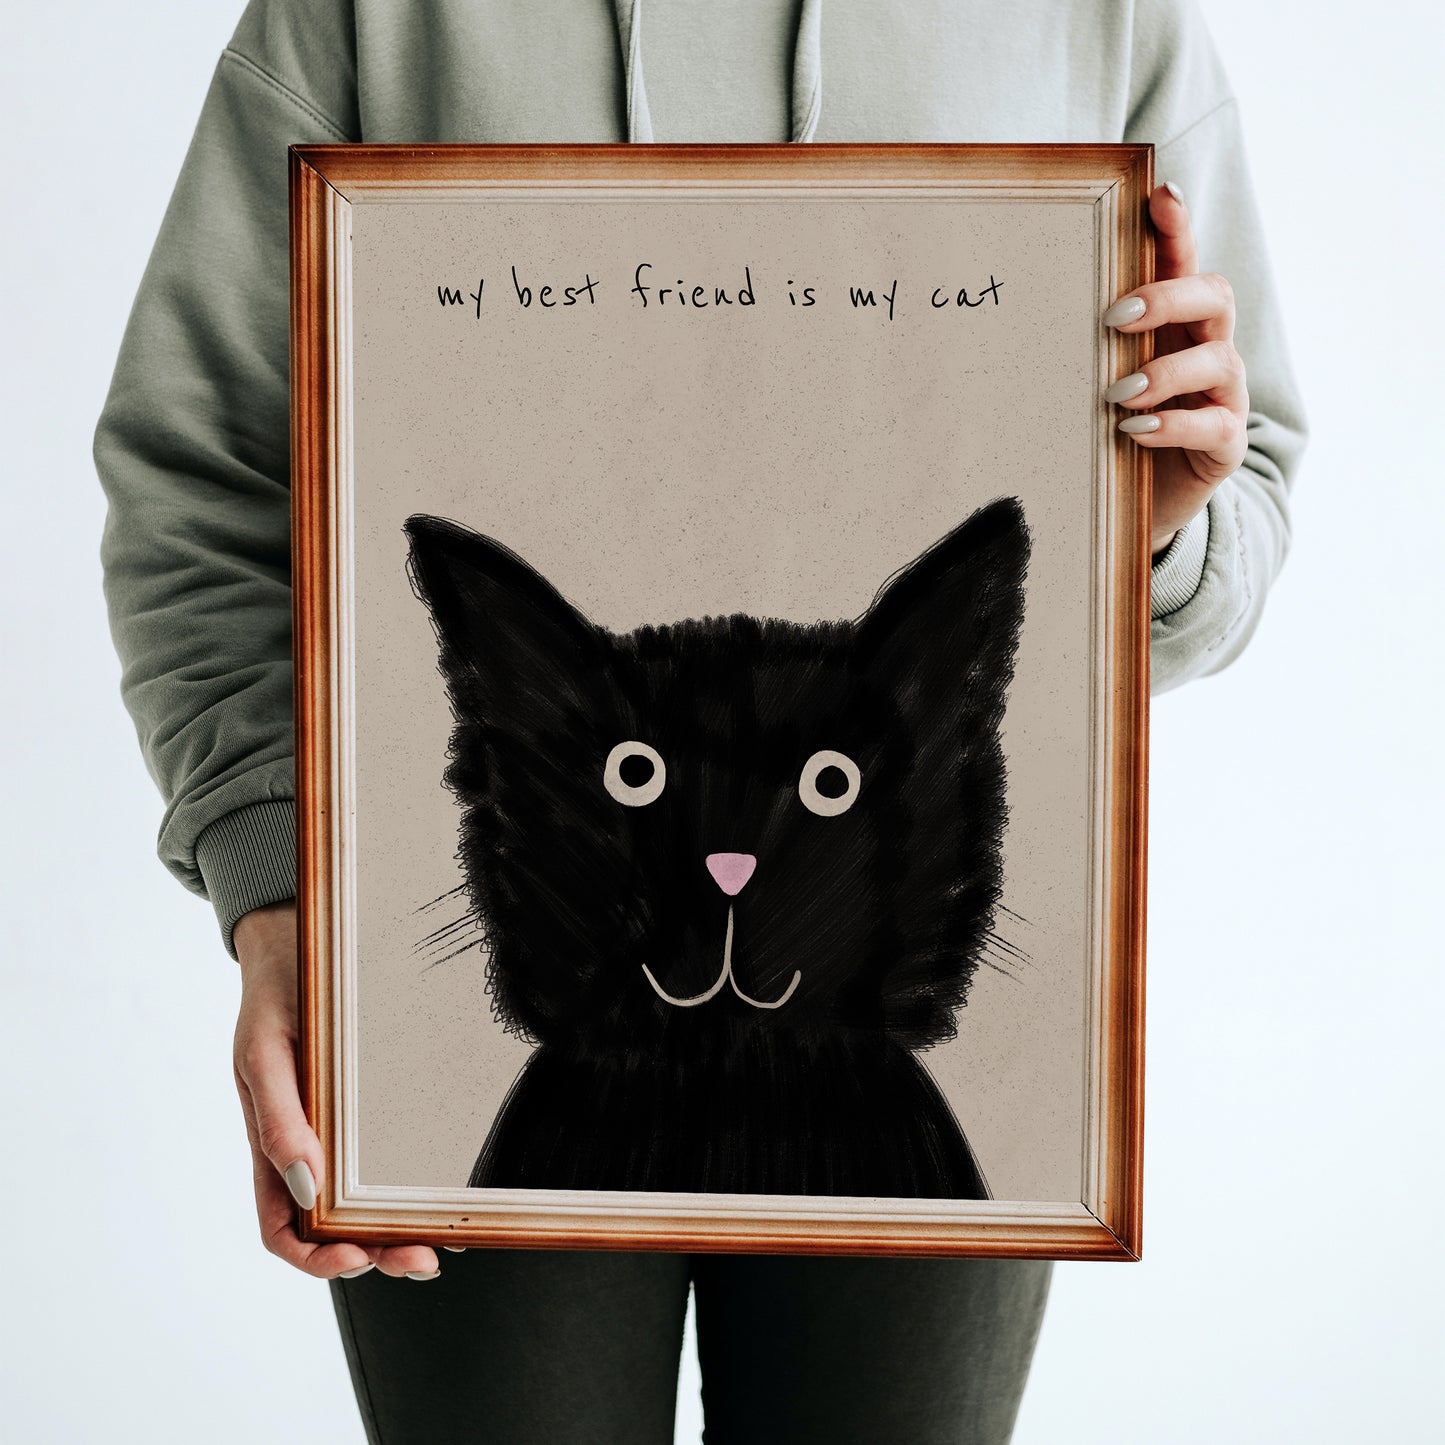 My Best Friend Is My Cat Poster